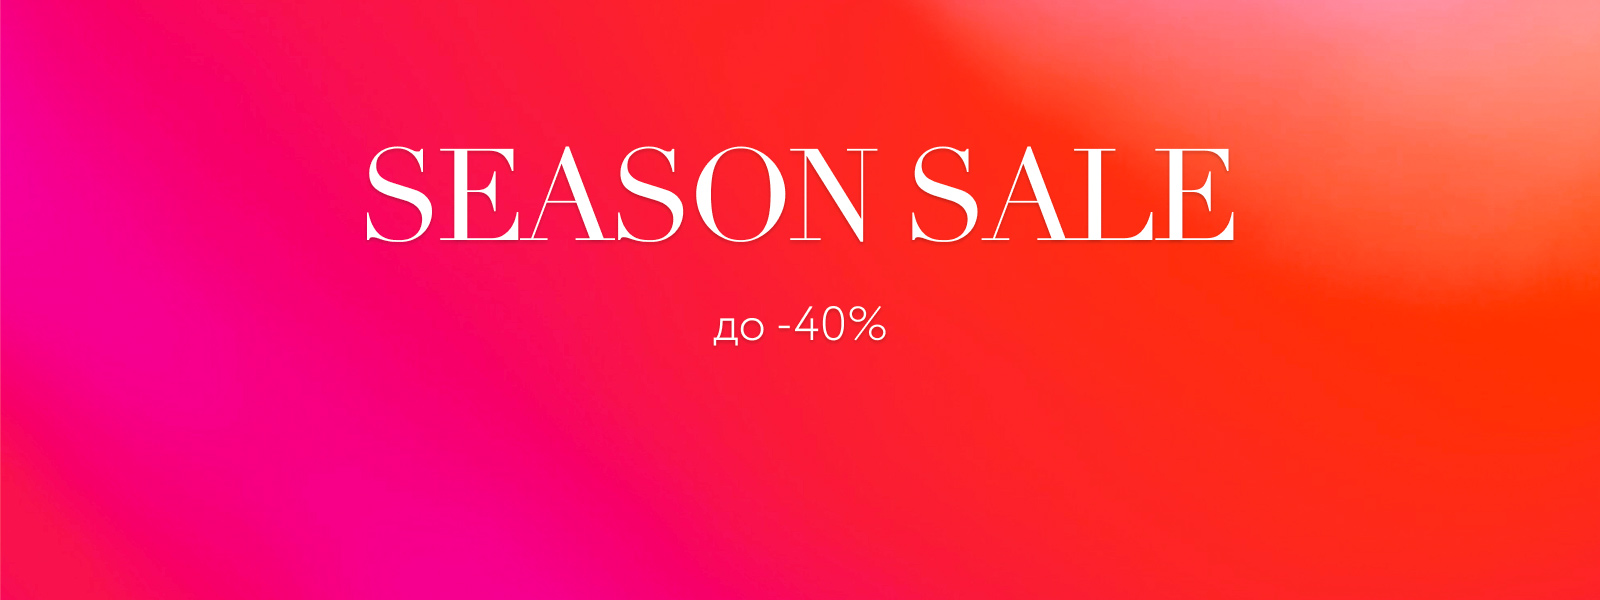 season sale